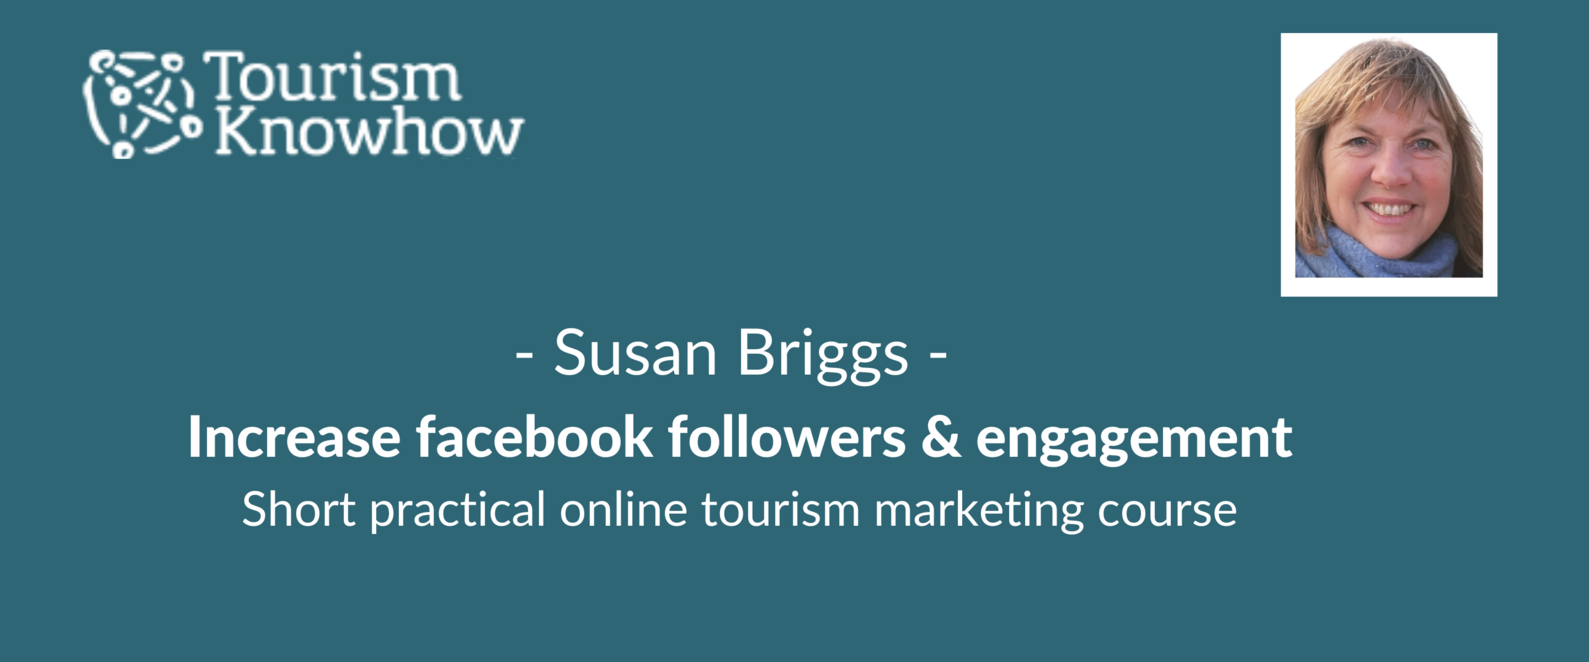 Facebook followers & engagement (2880 x 1200 px)